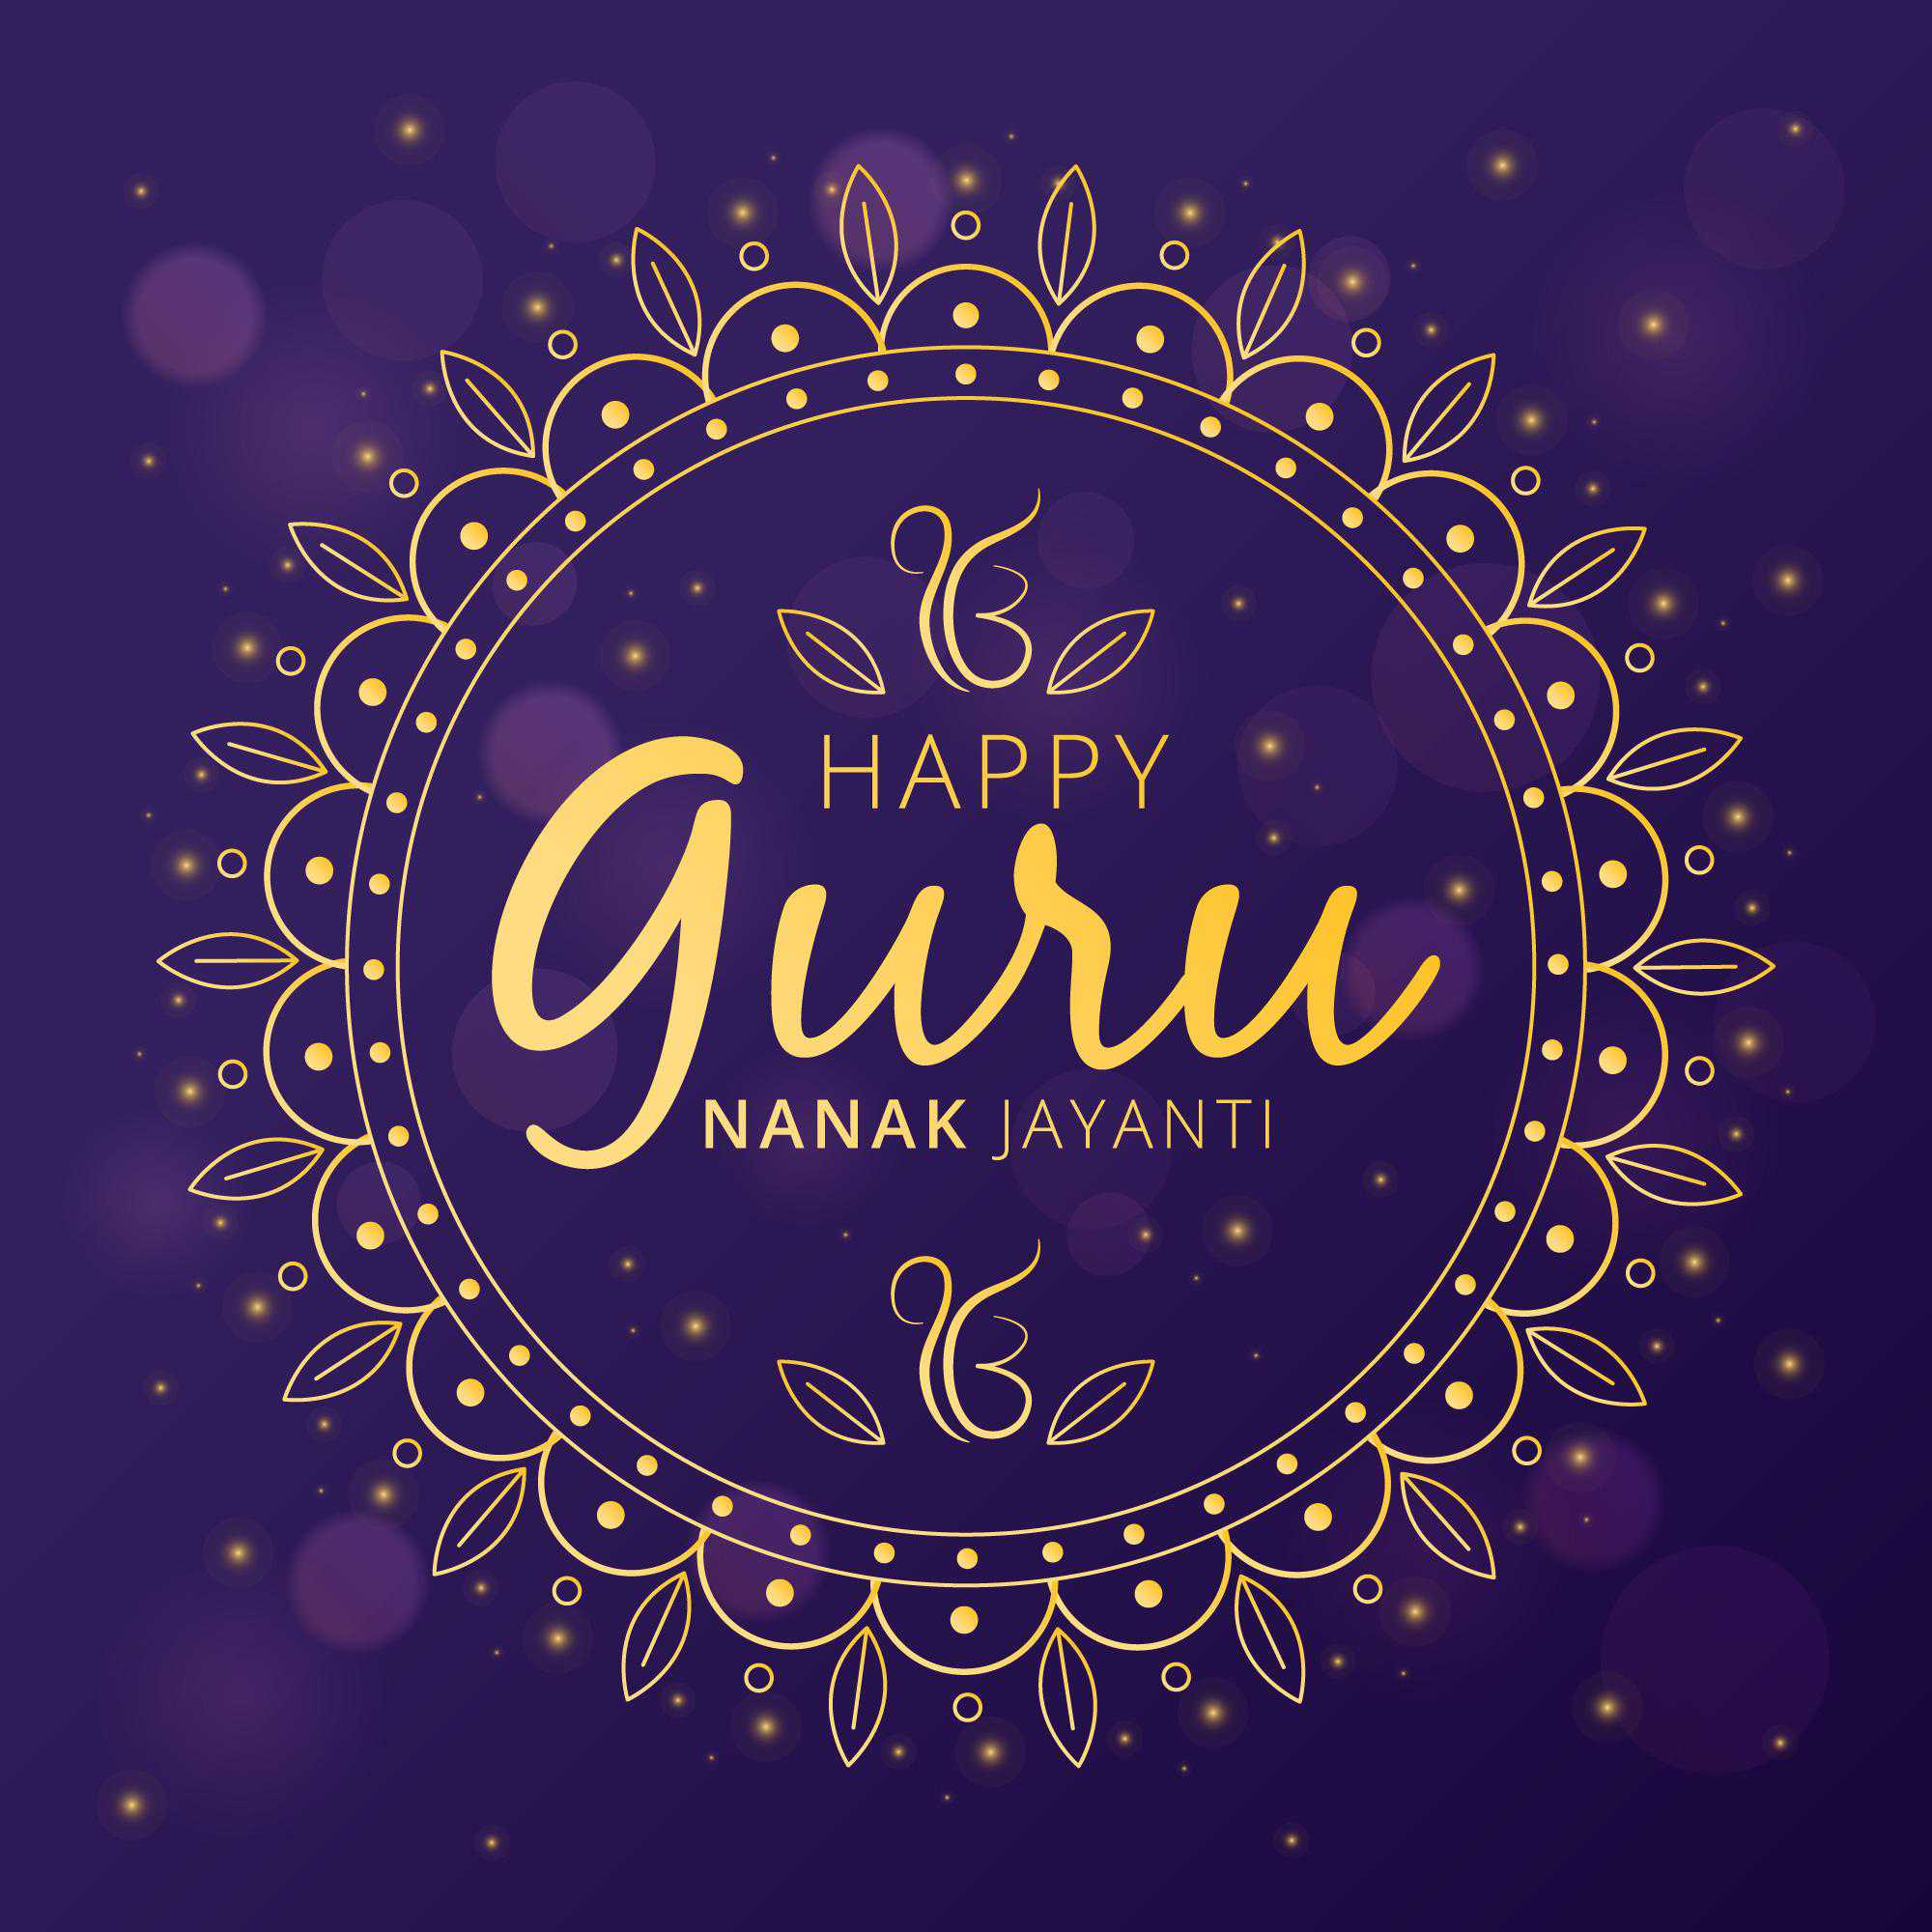 Happy guru nanak jayanti pictures download 